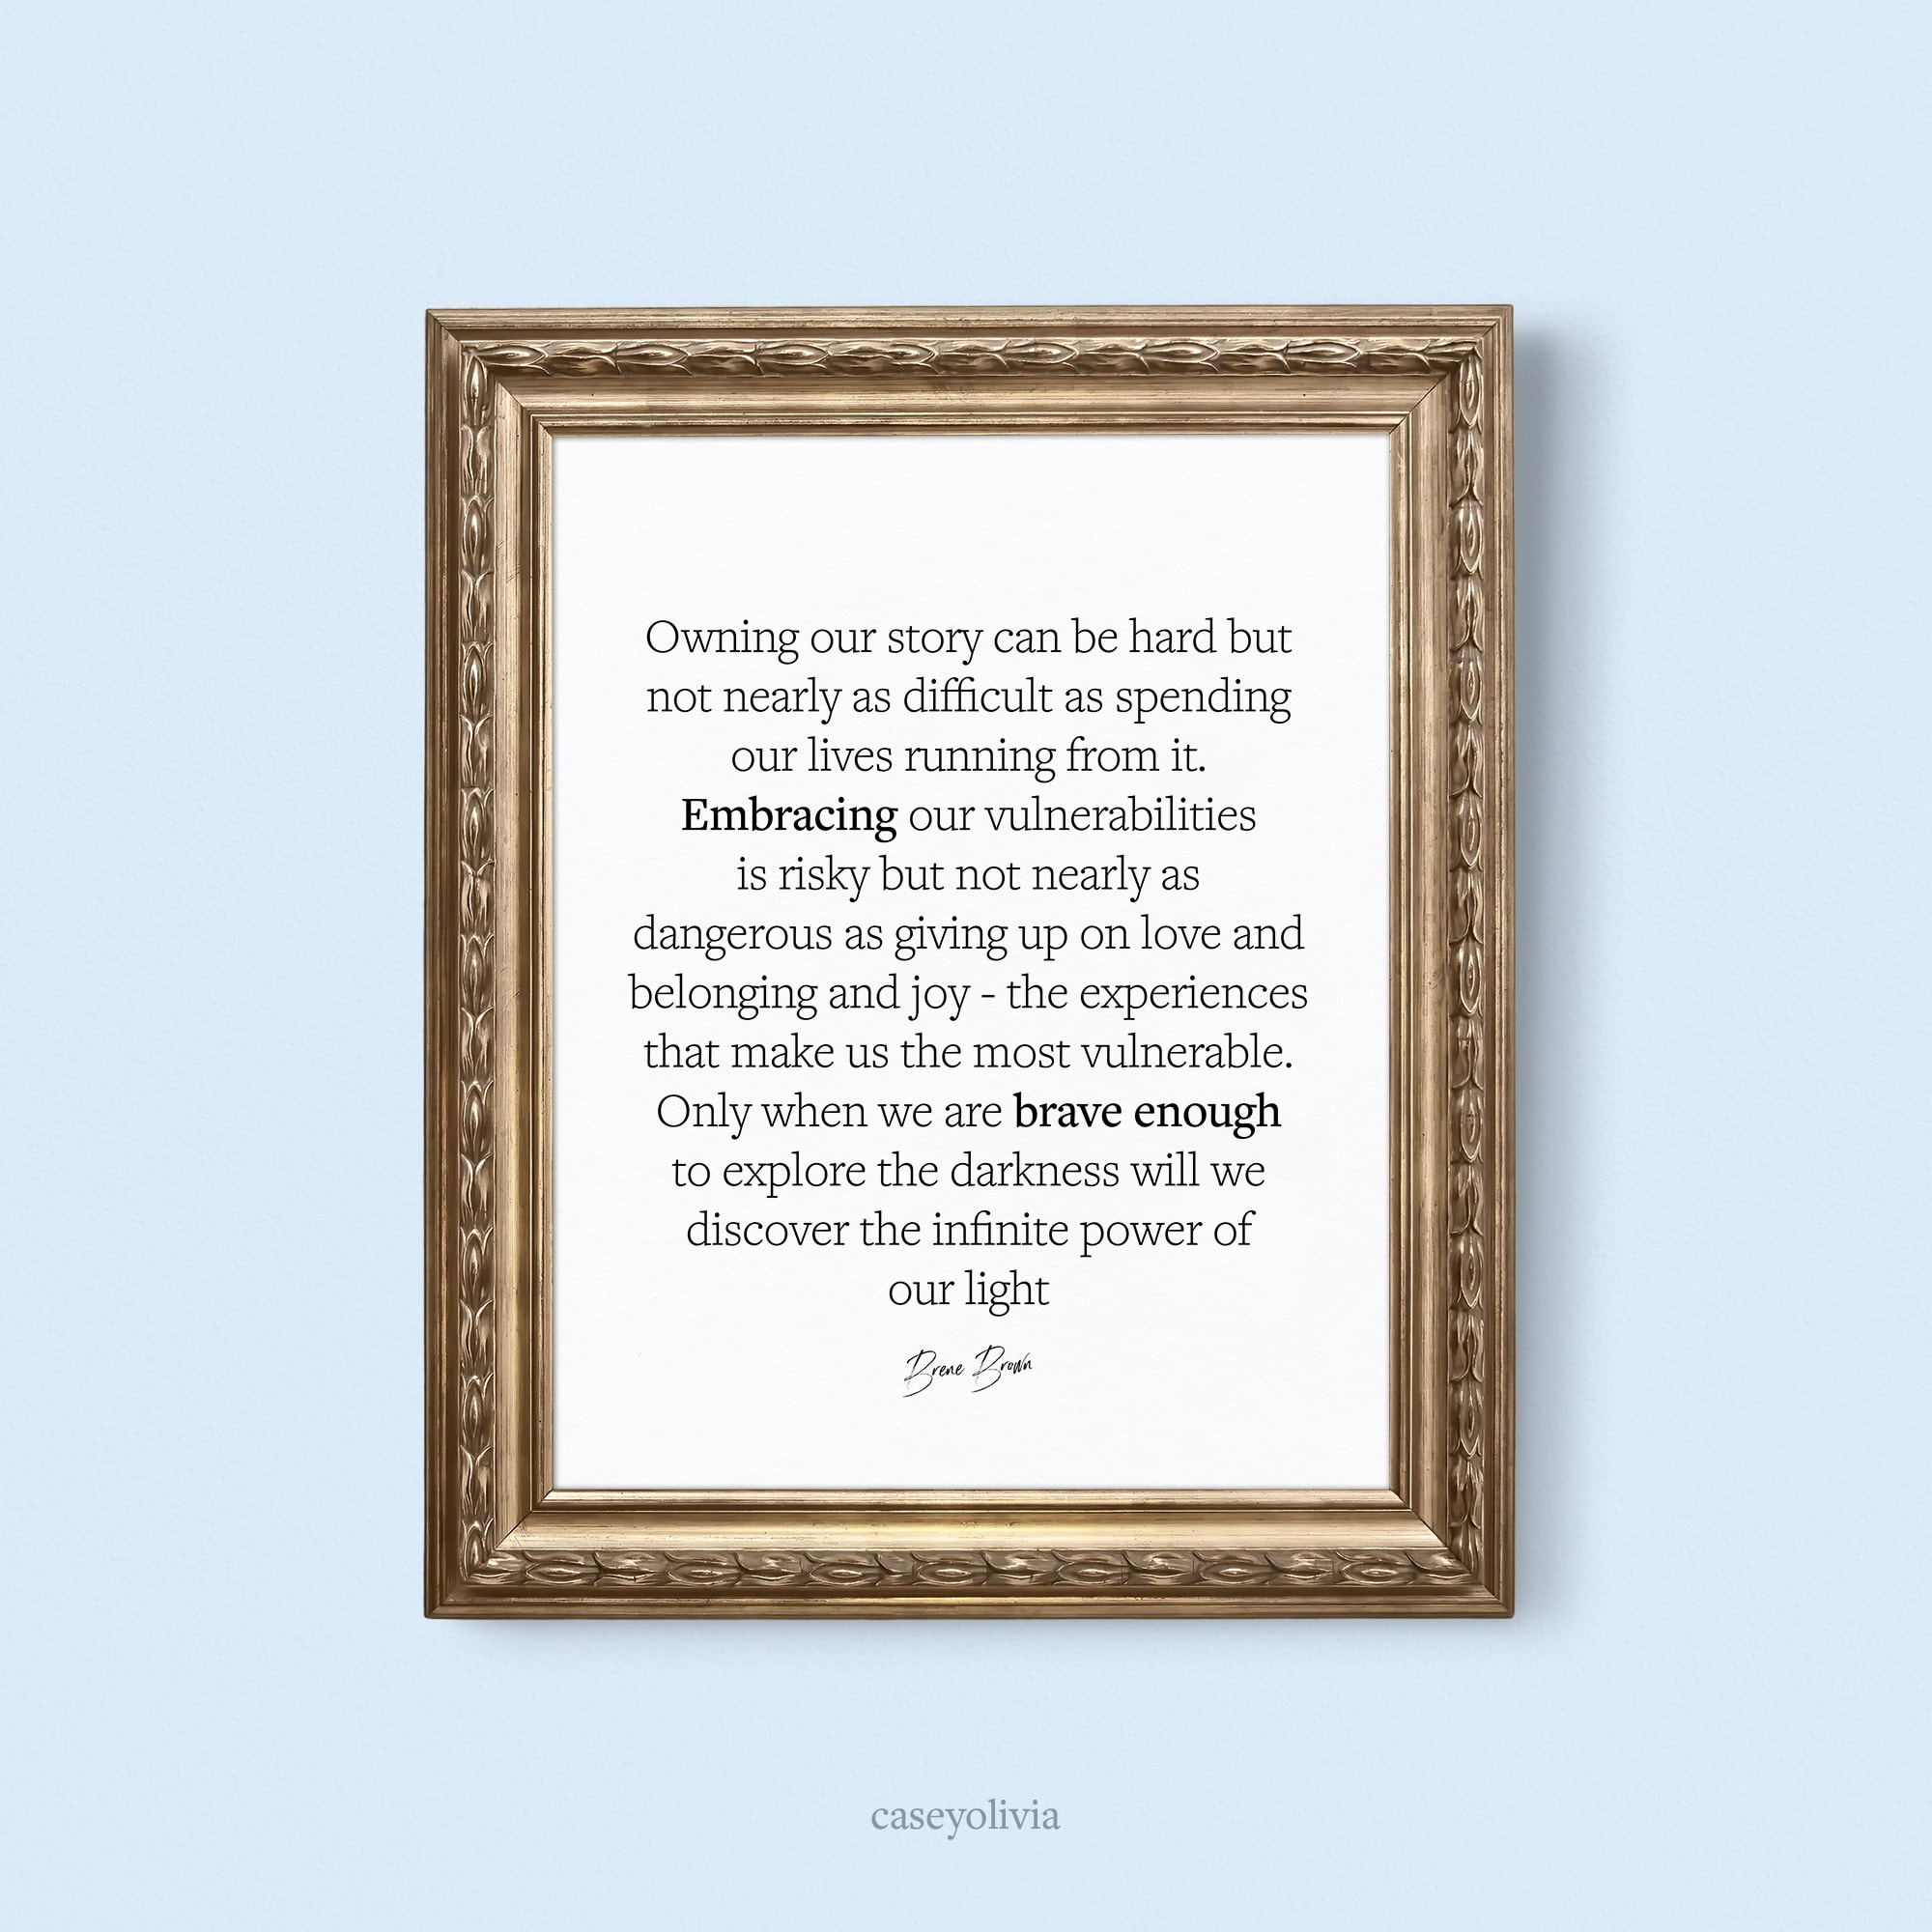 brene brown printable quote framed in a vintage frame